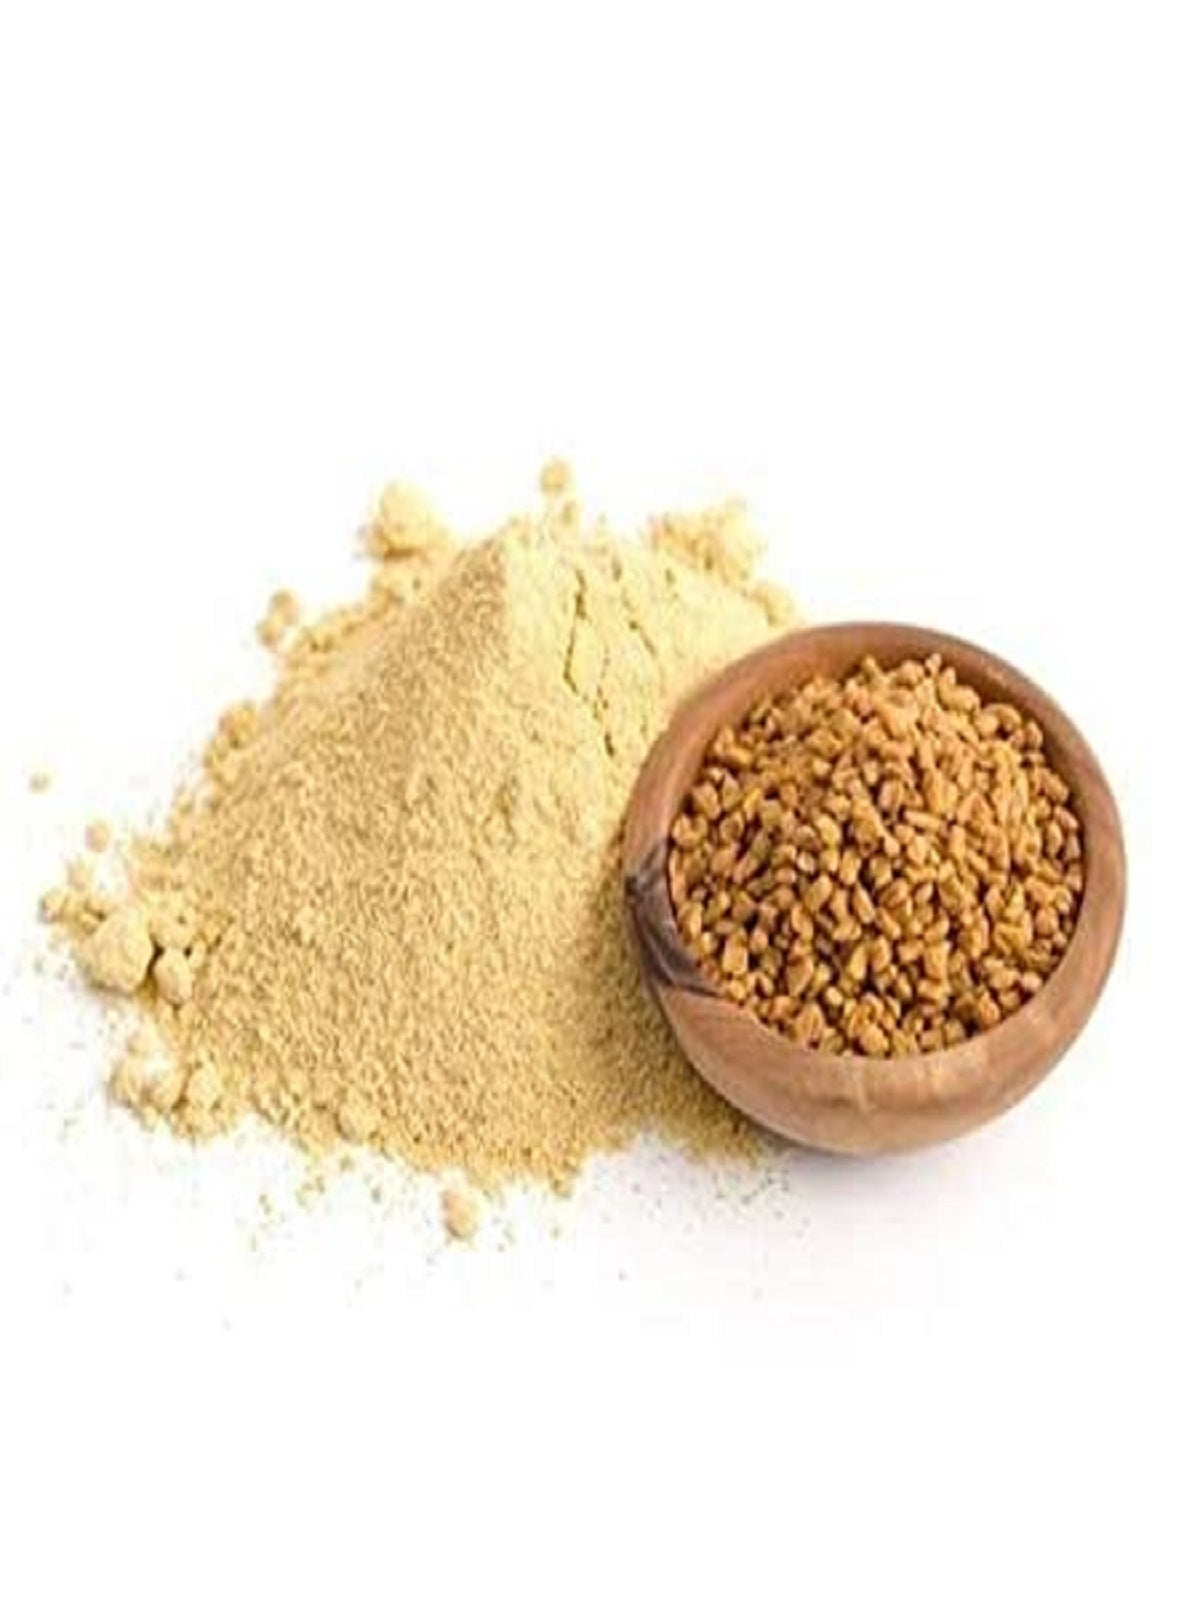 Buy the best quality Methi dana powder fenugreek online at Farmonics